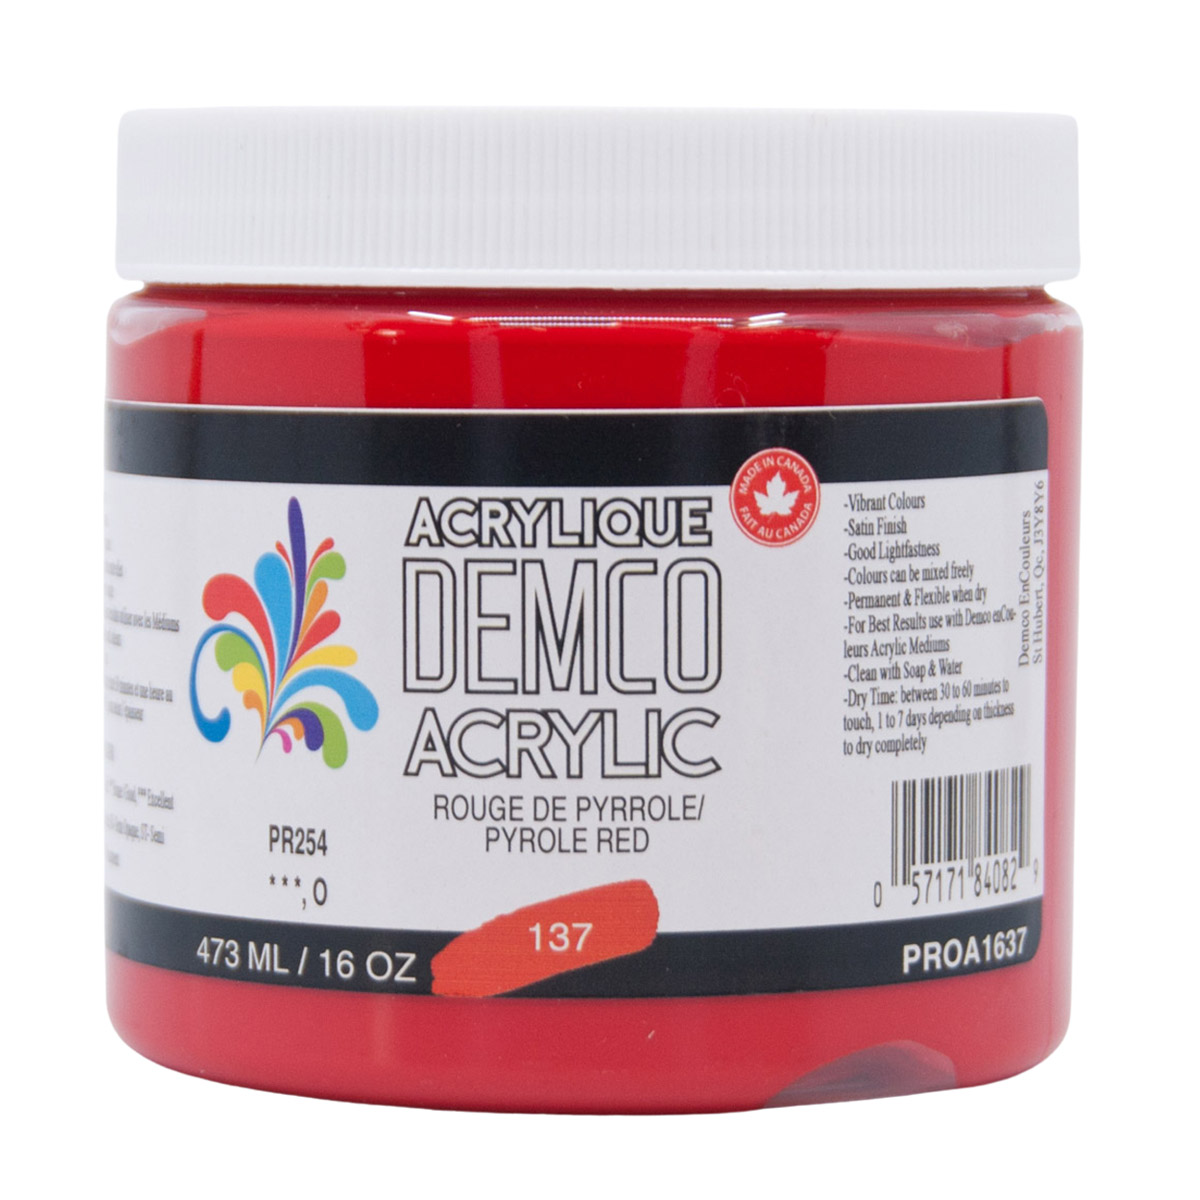 Demco Acrylic Pyrrole Red 473ml/16oz